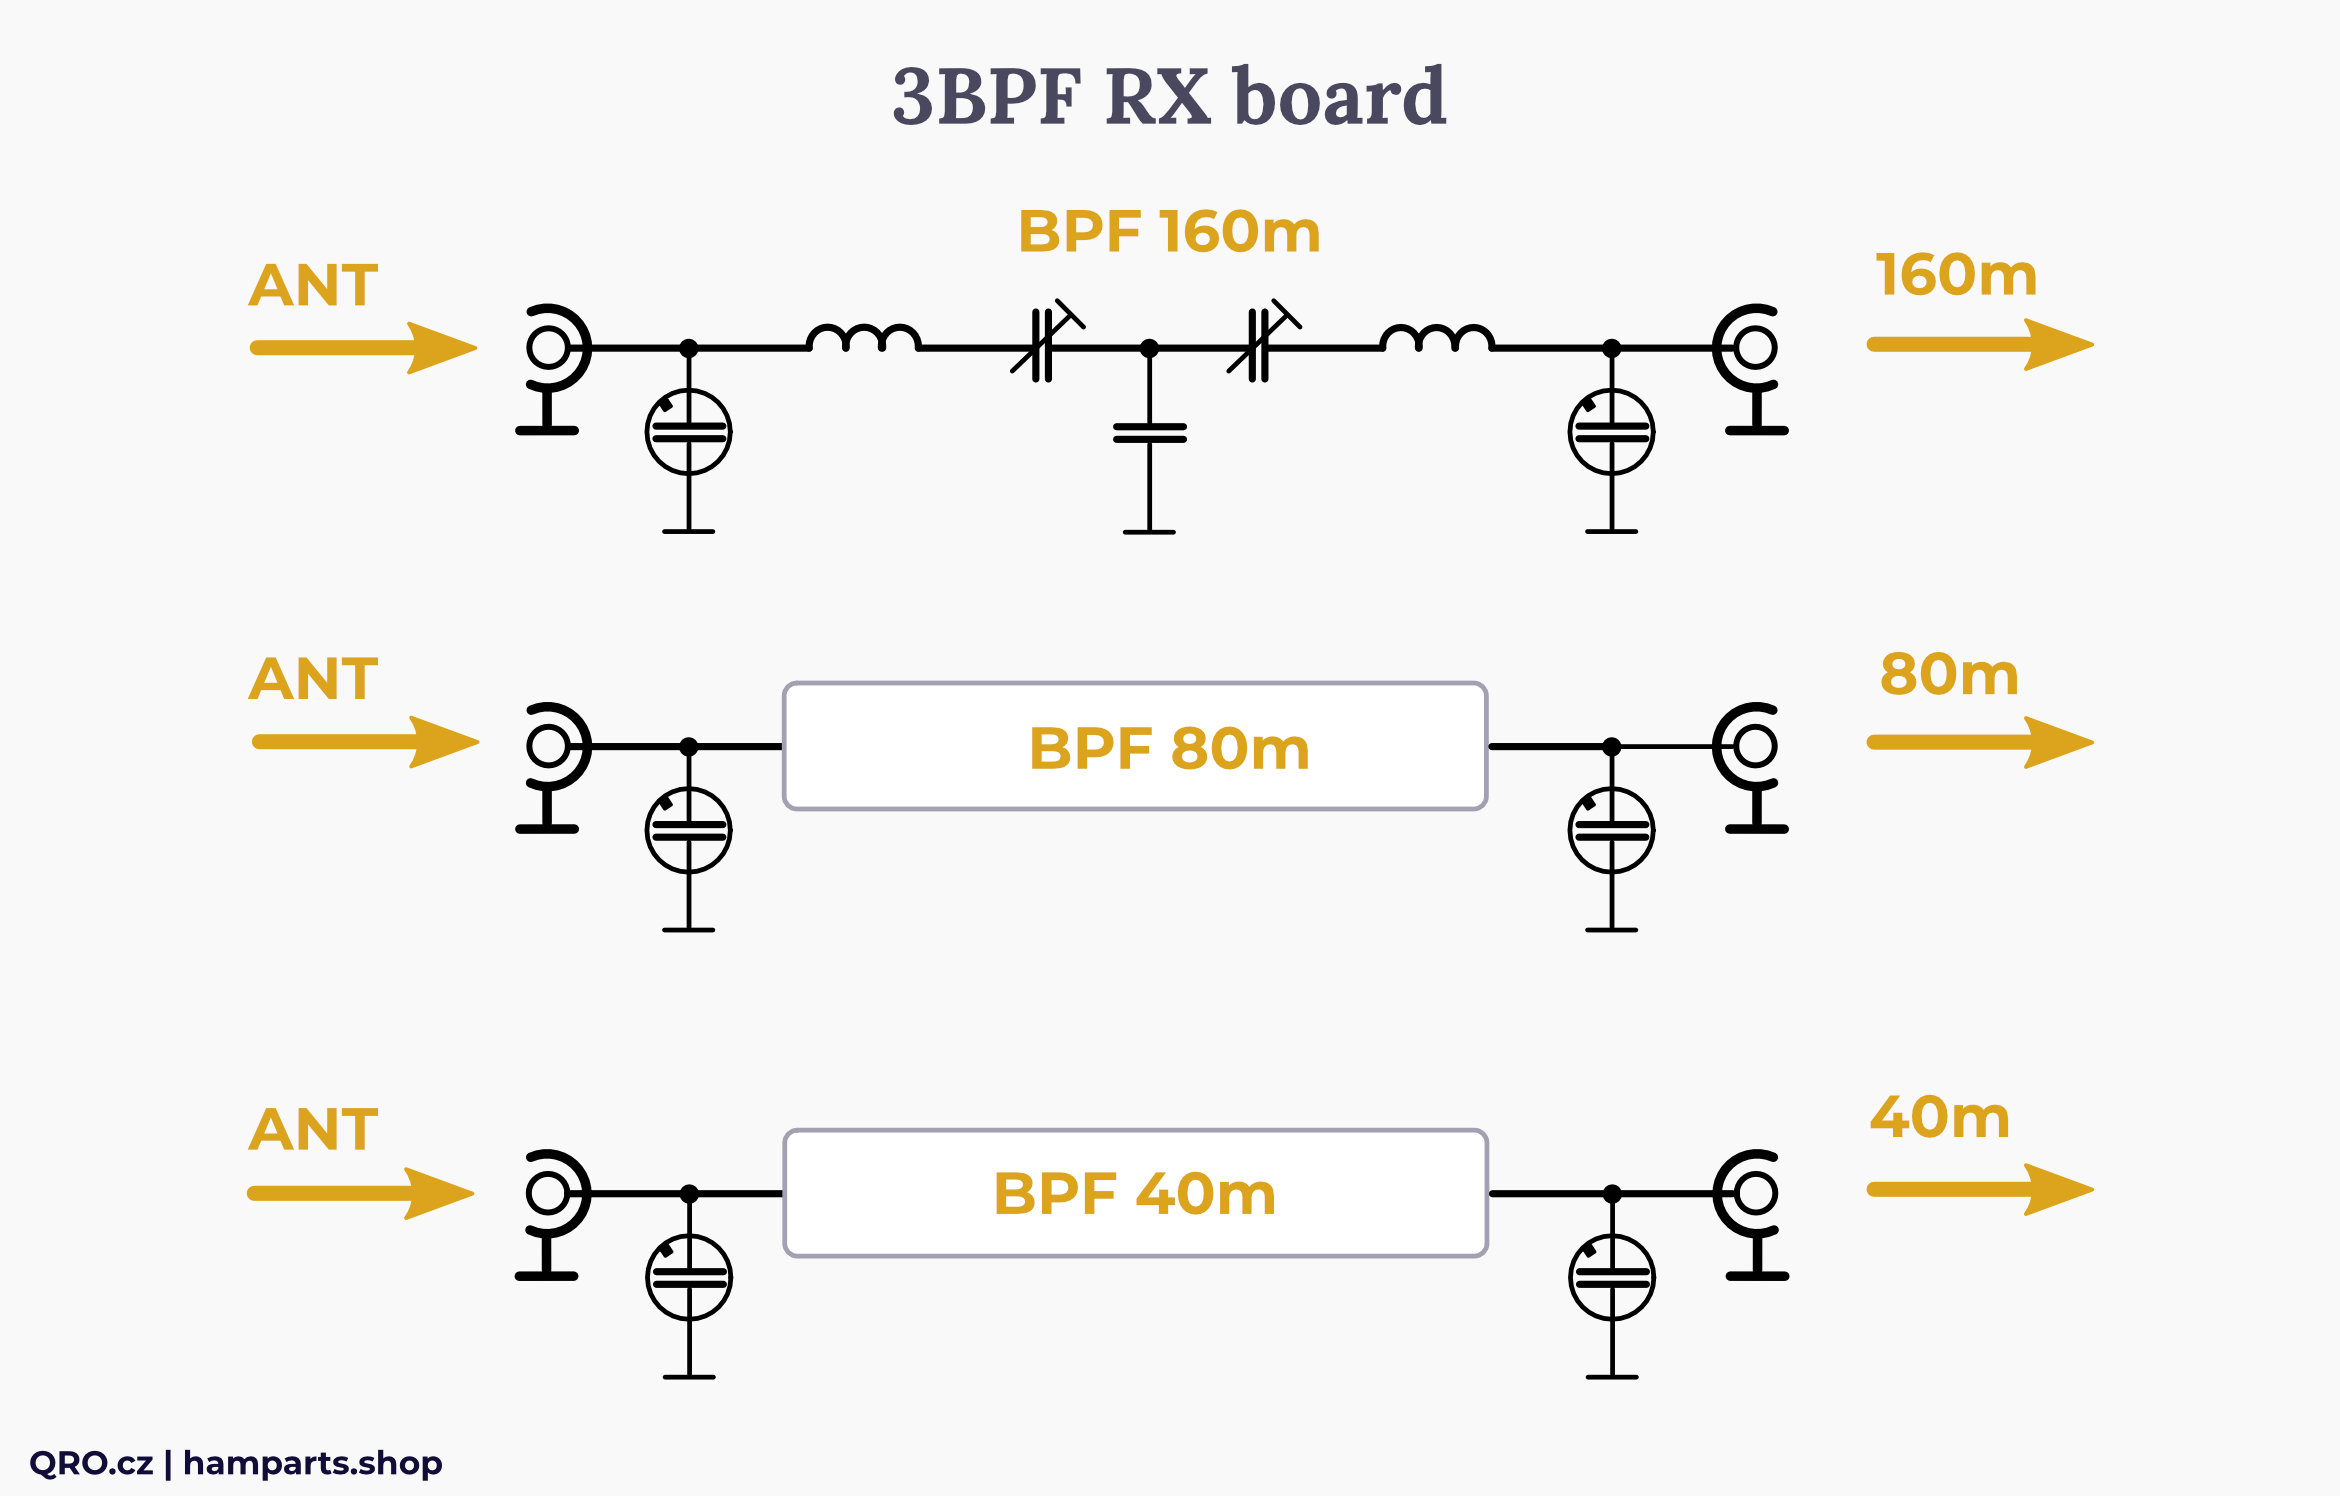 3bpf rx board by qro.cz hamparts.shop